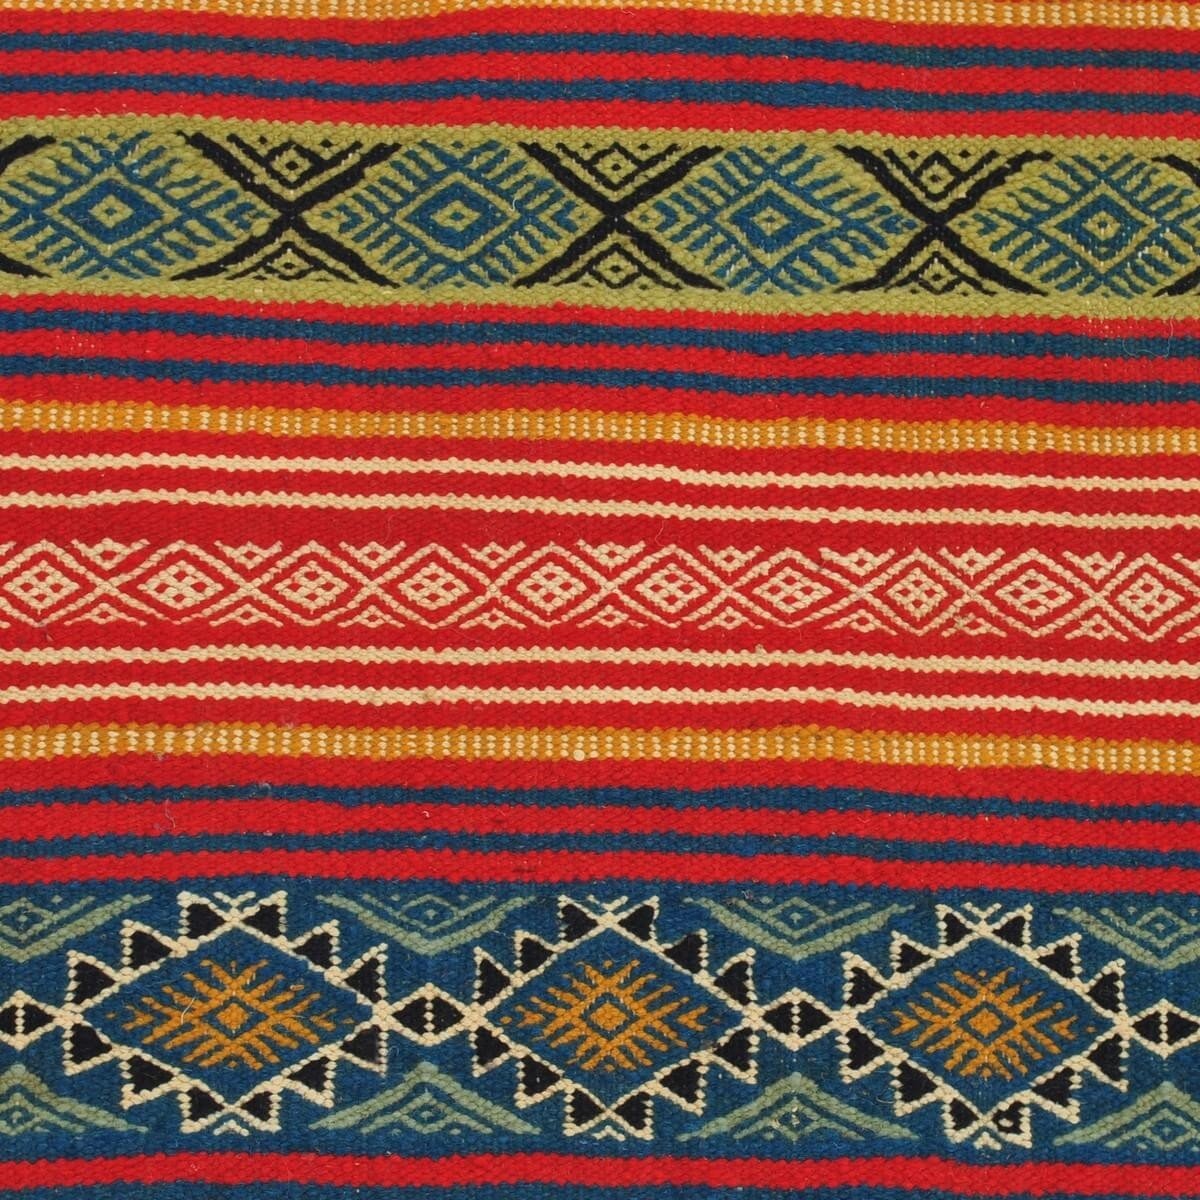 Berber tapijt Tapijt Kilim lang Gasrine 60x195 Rood/Veelkleurig (Handgeweven, Wol, Tunesië) Tunesisch kilimdeken, Marokkaanse st